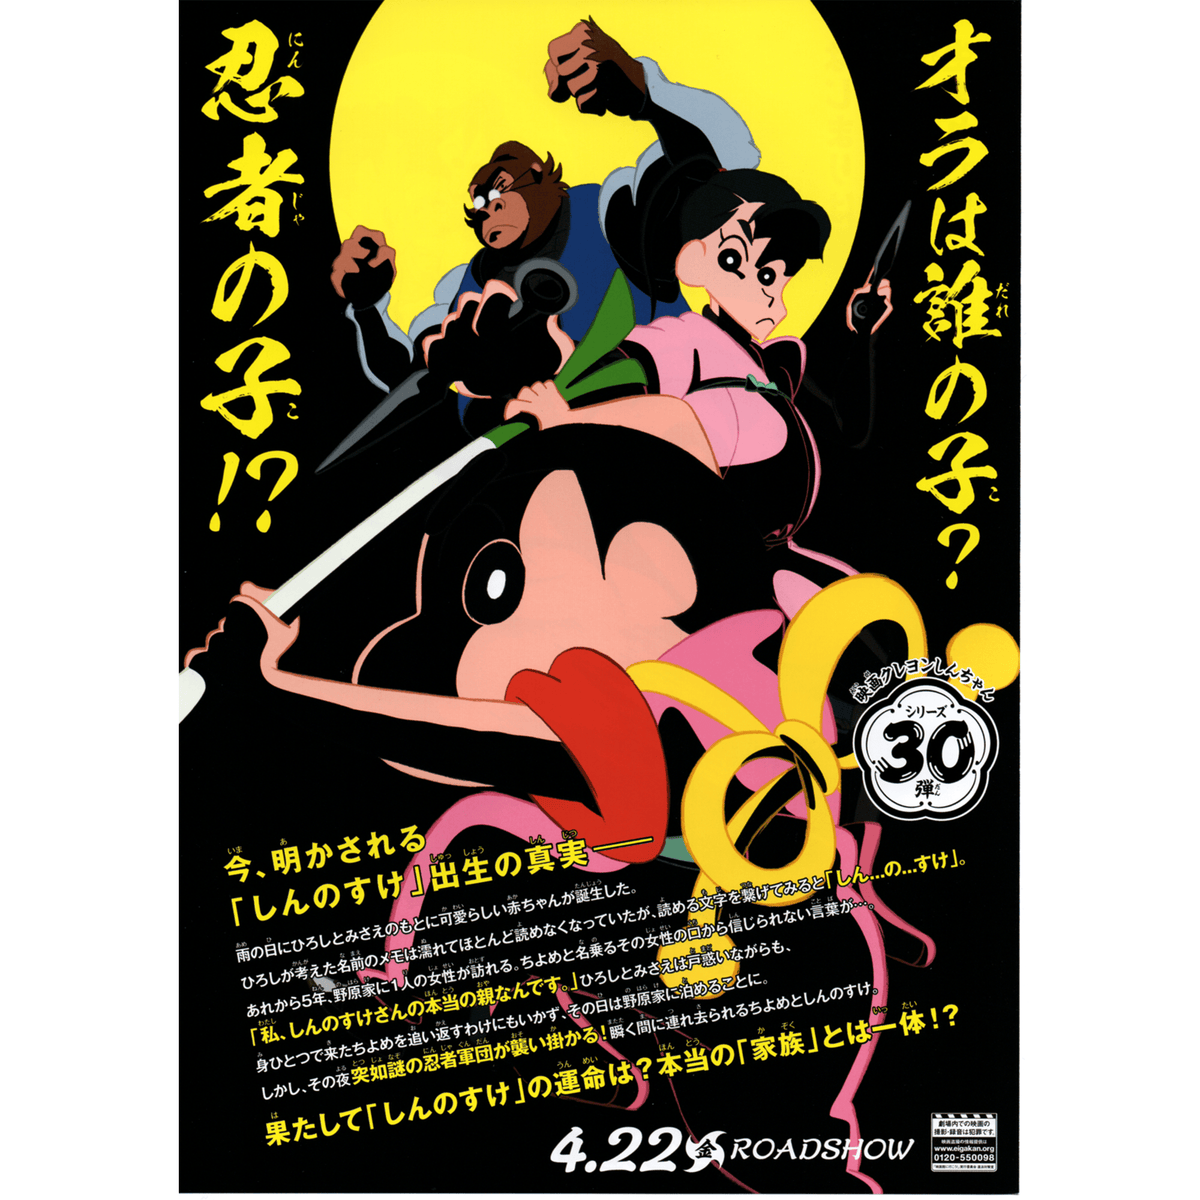 Watashi no Tadashii Onii-chan  Movie posters, Humanoid sketch, Poster